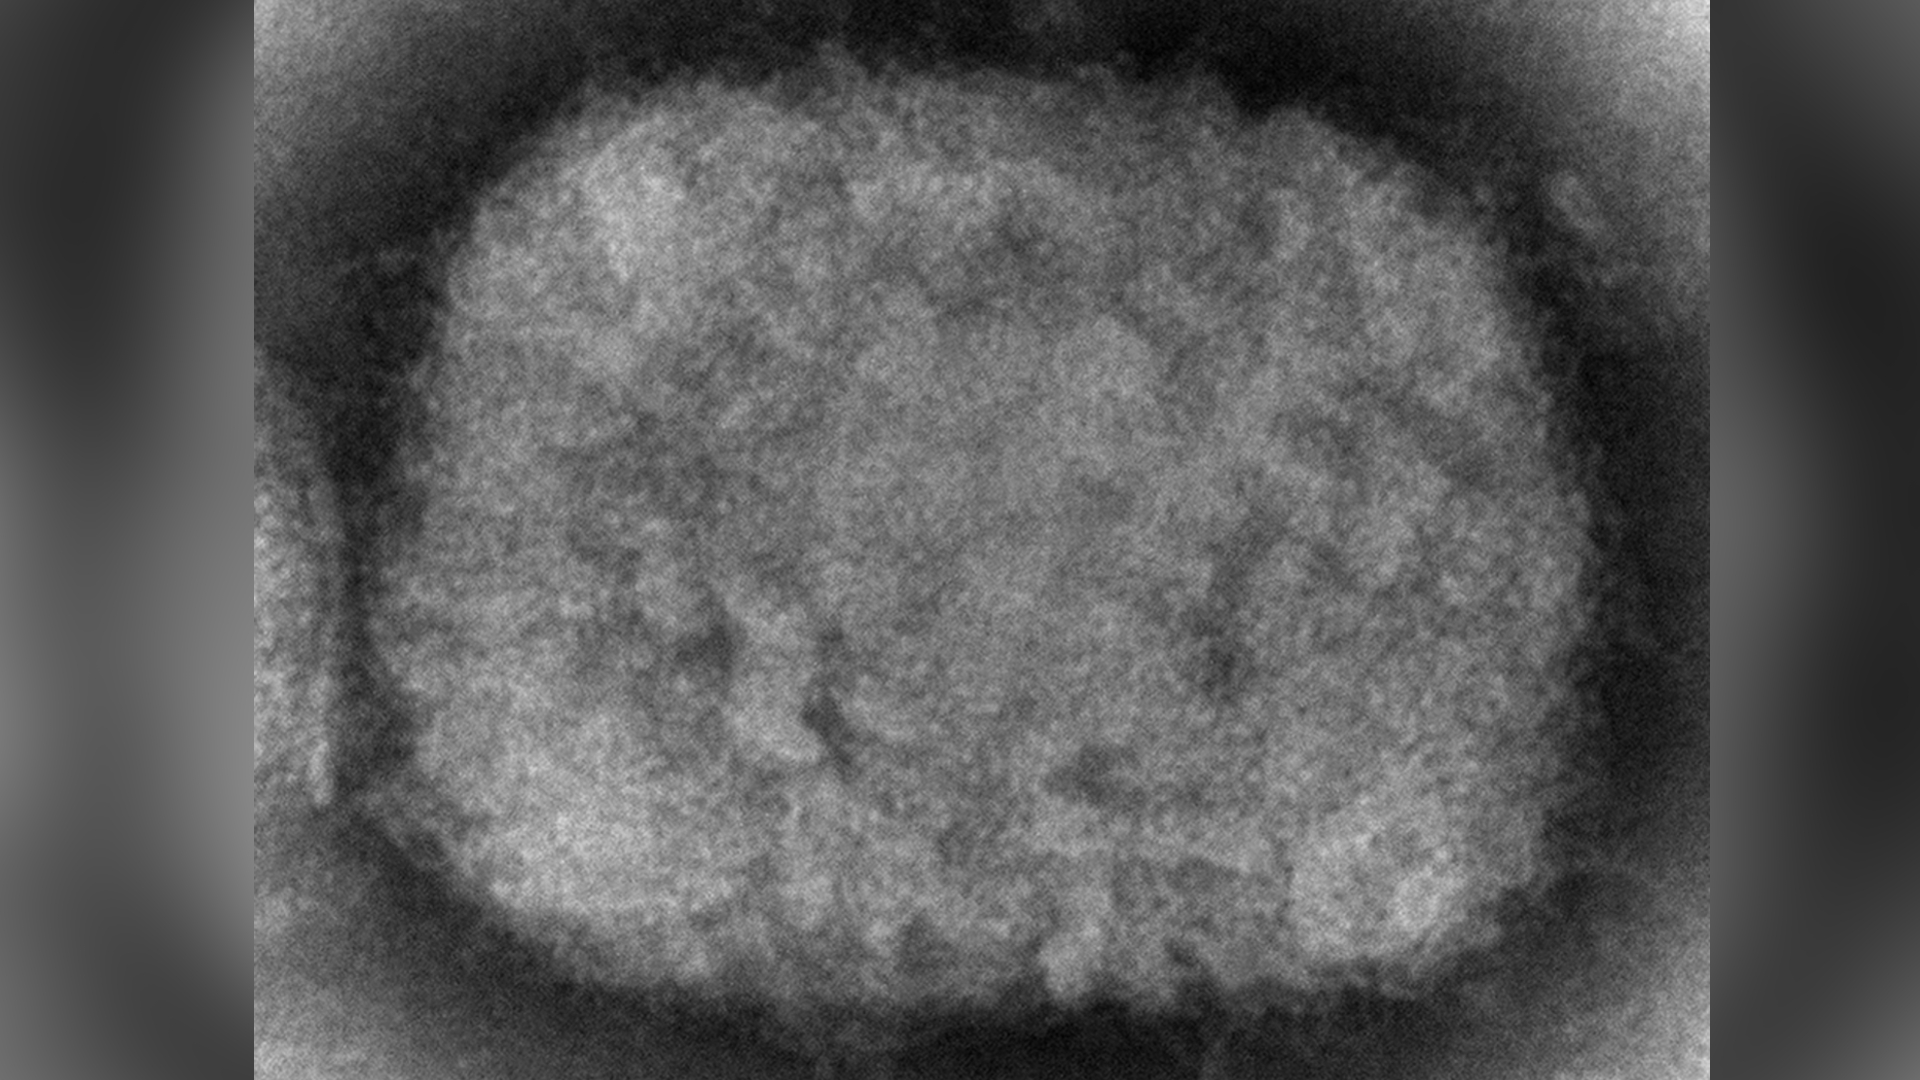 Spain Confirms 7 Monkeypox Cases as European Outbreak Grows